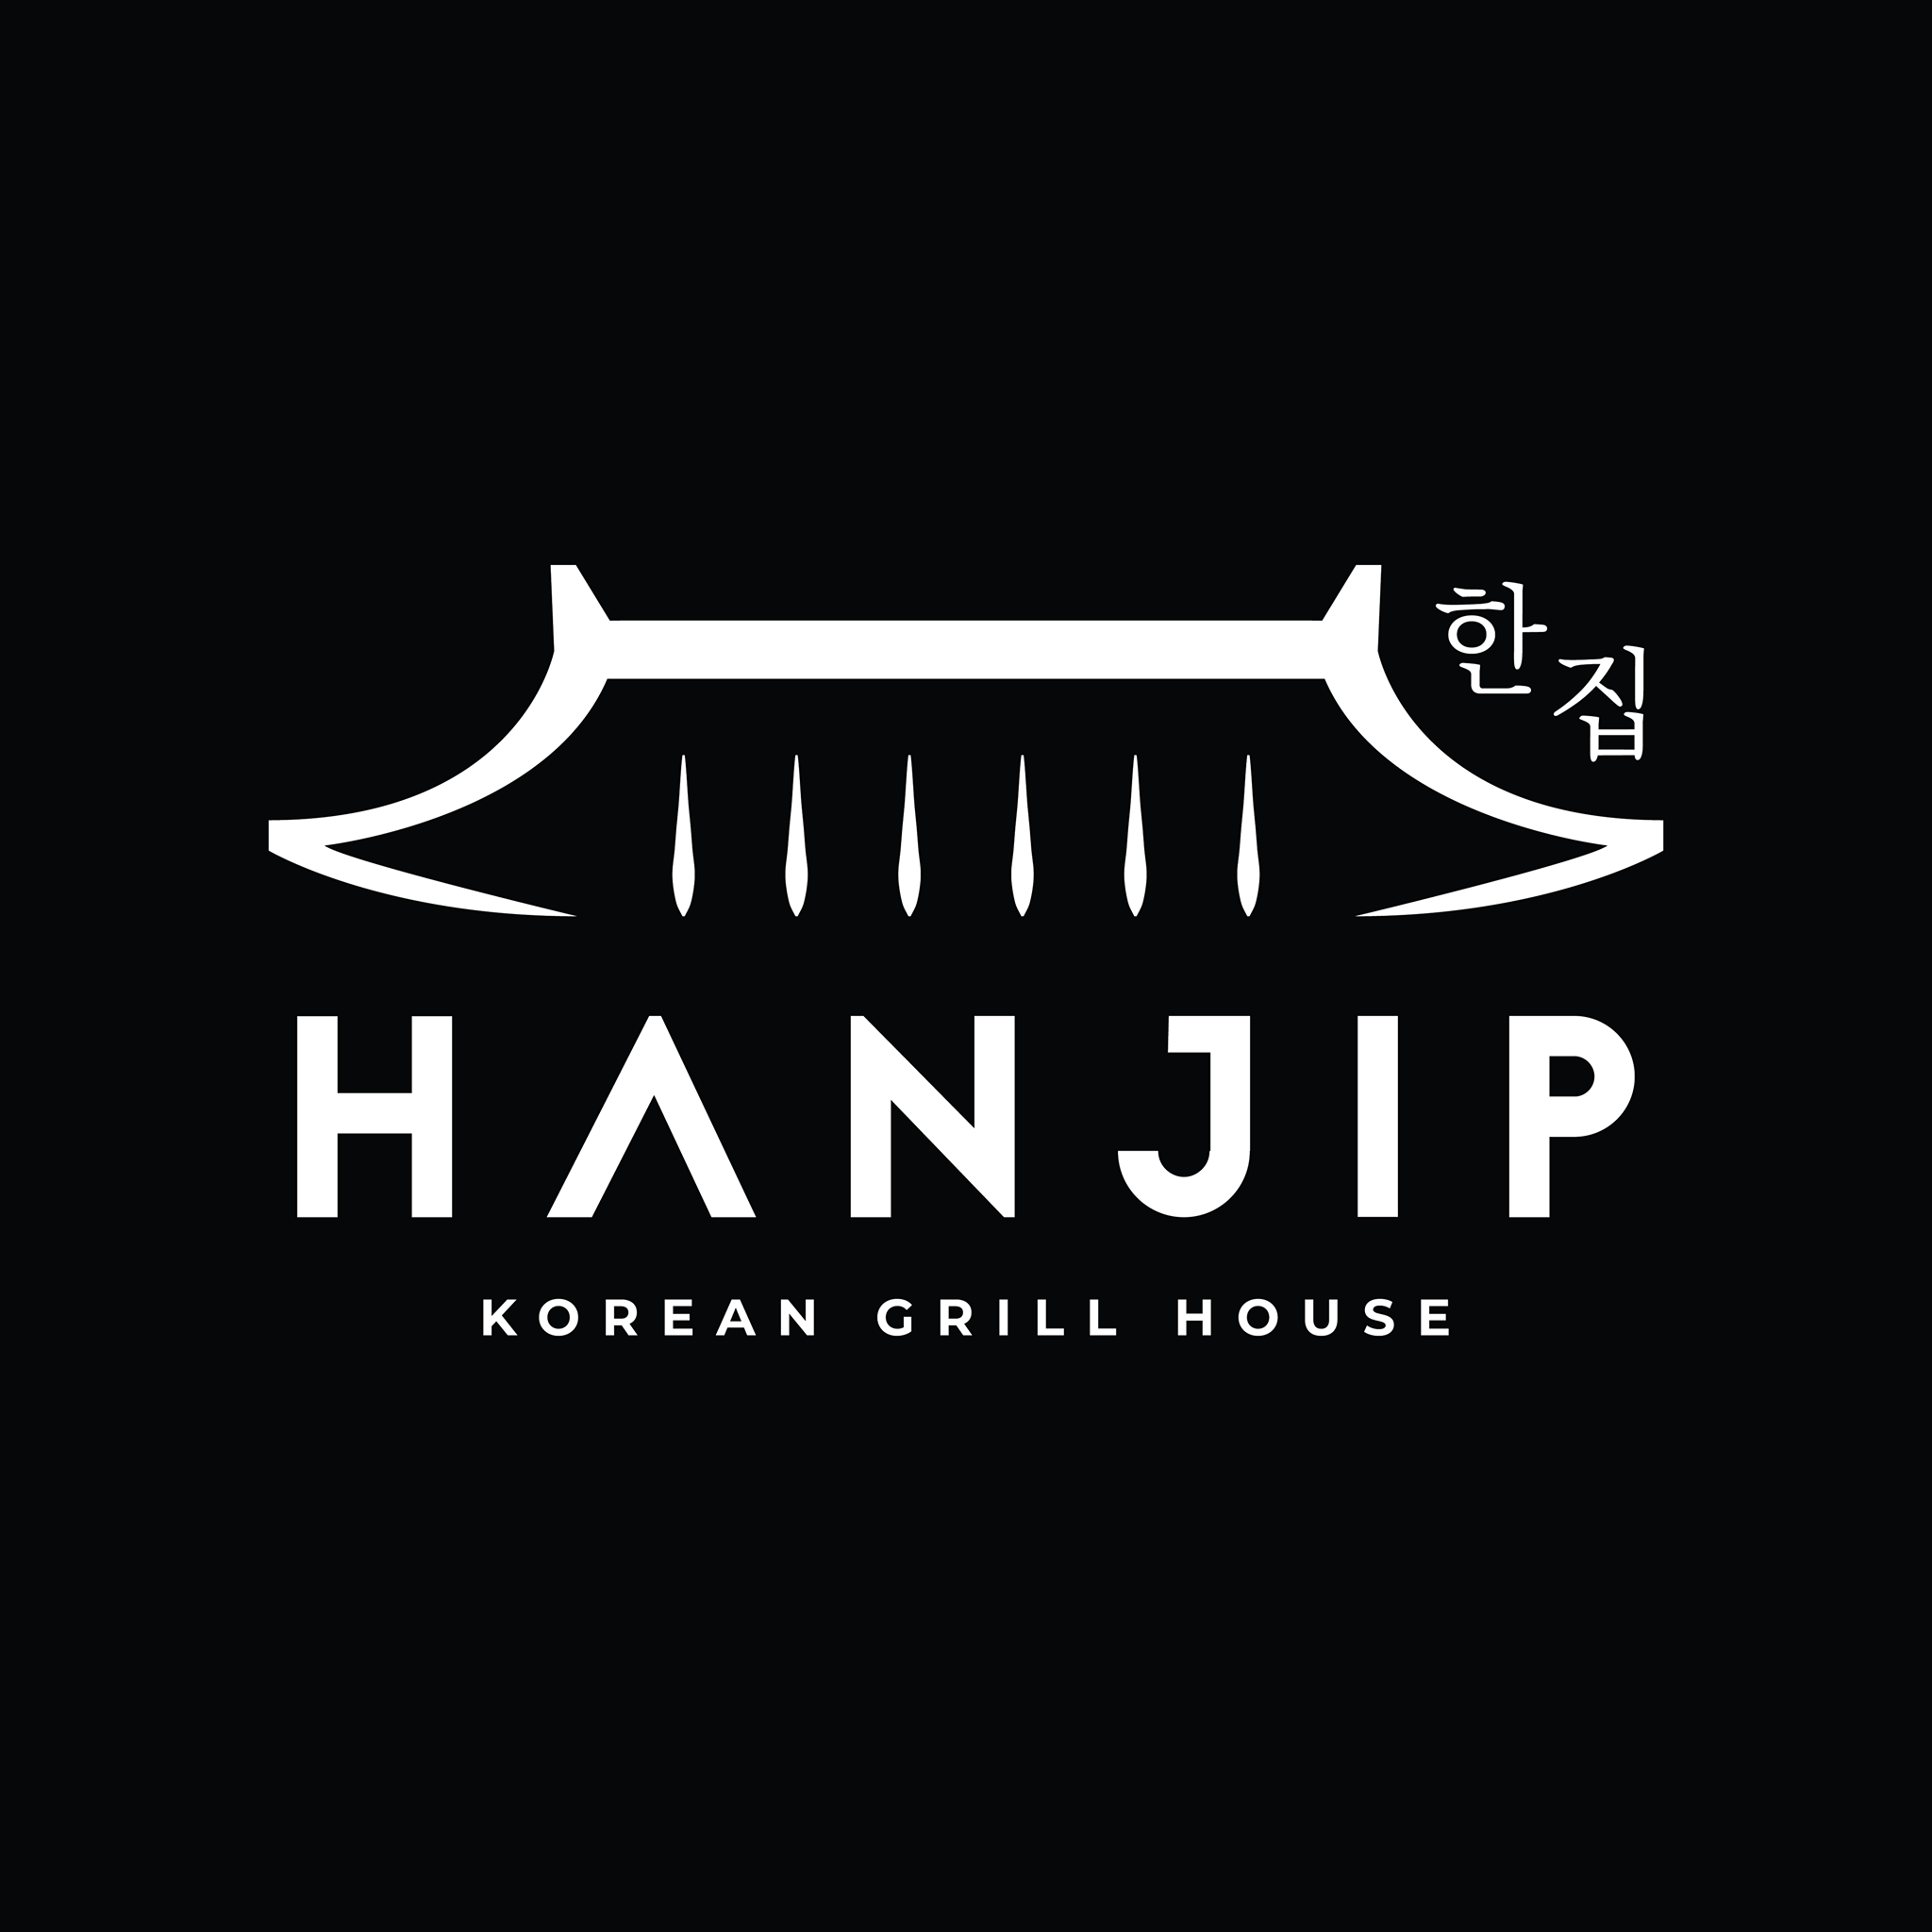 Hanjip Korean Grill House Logo